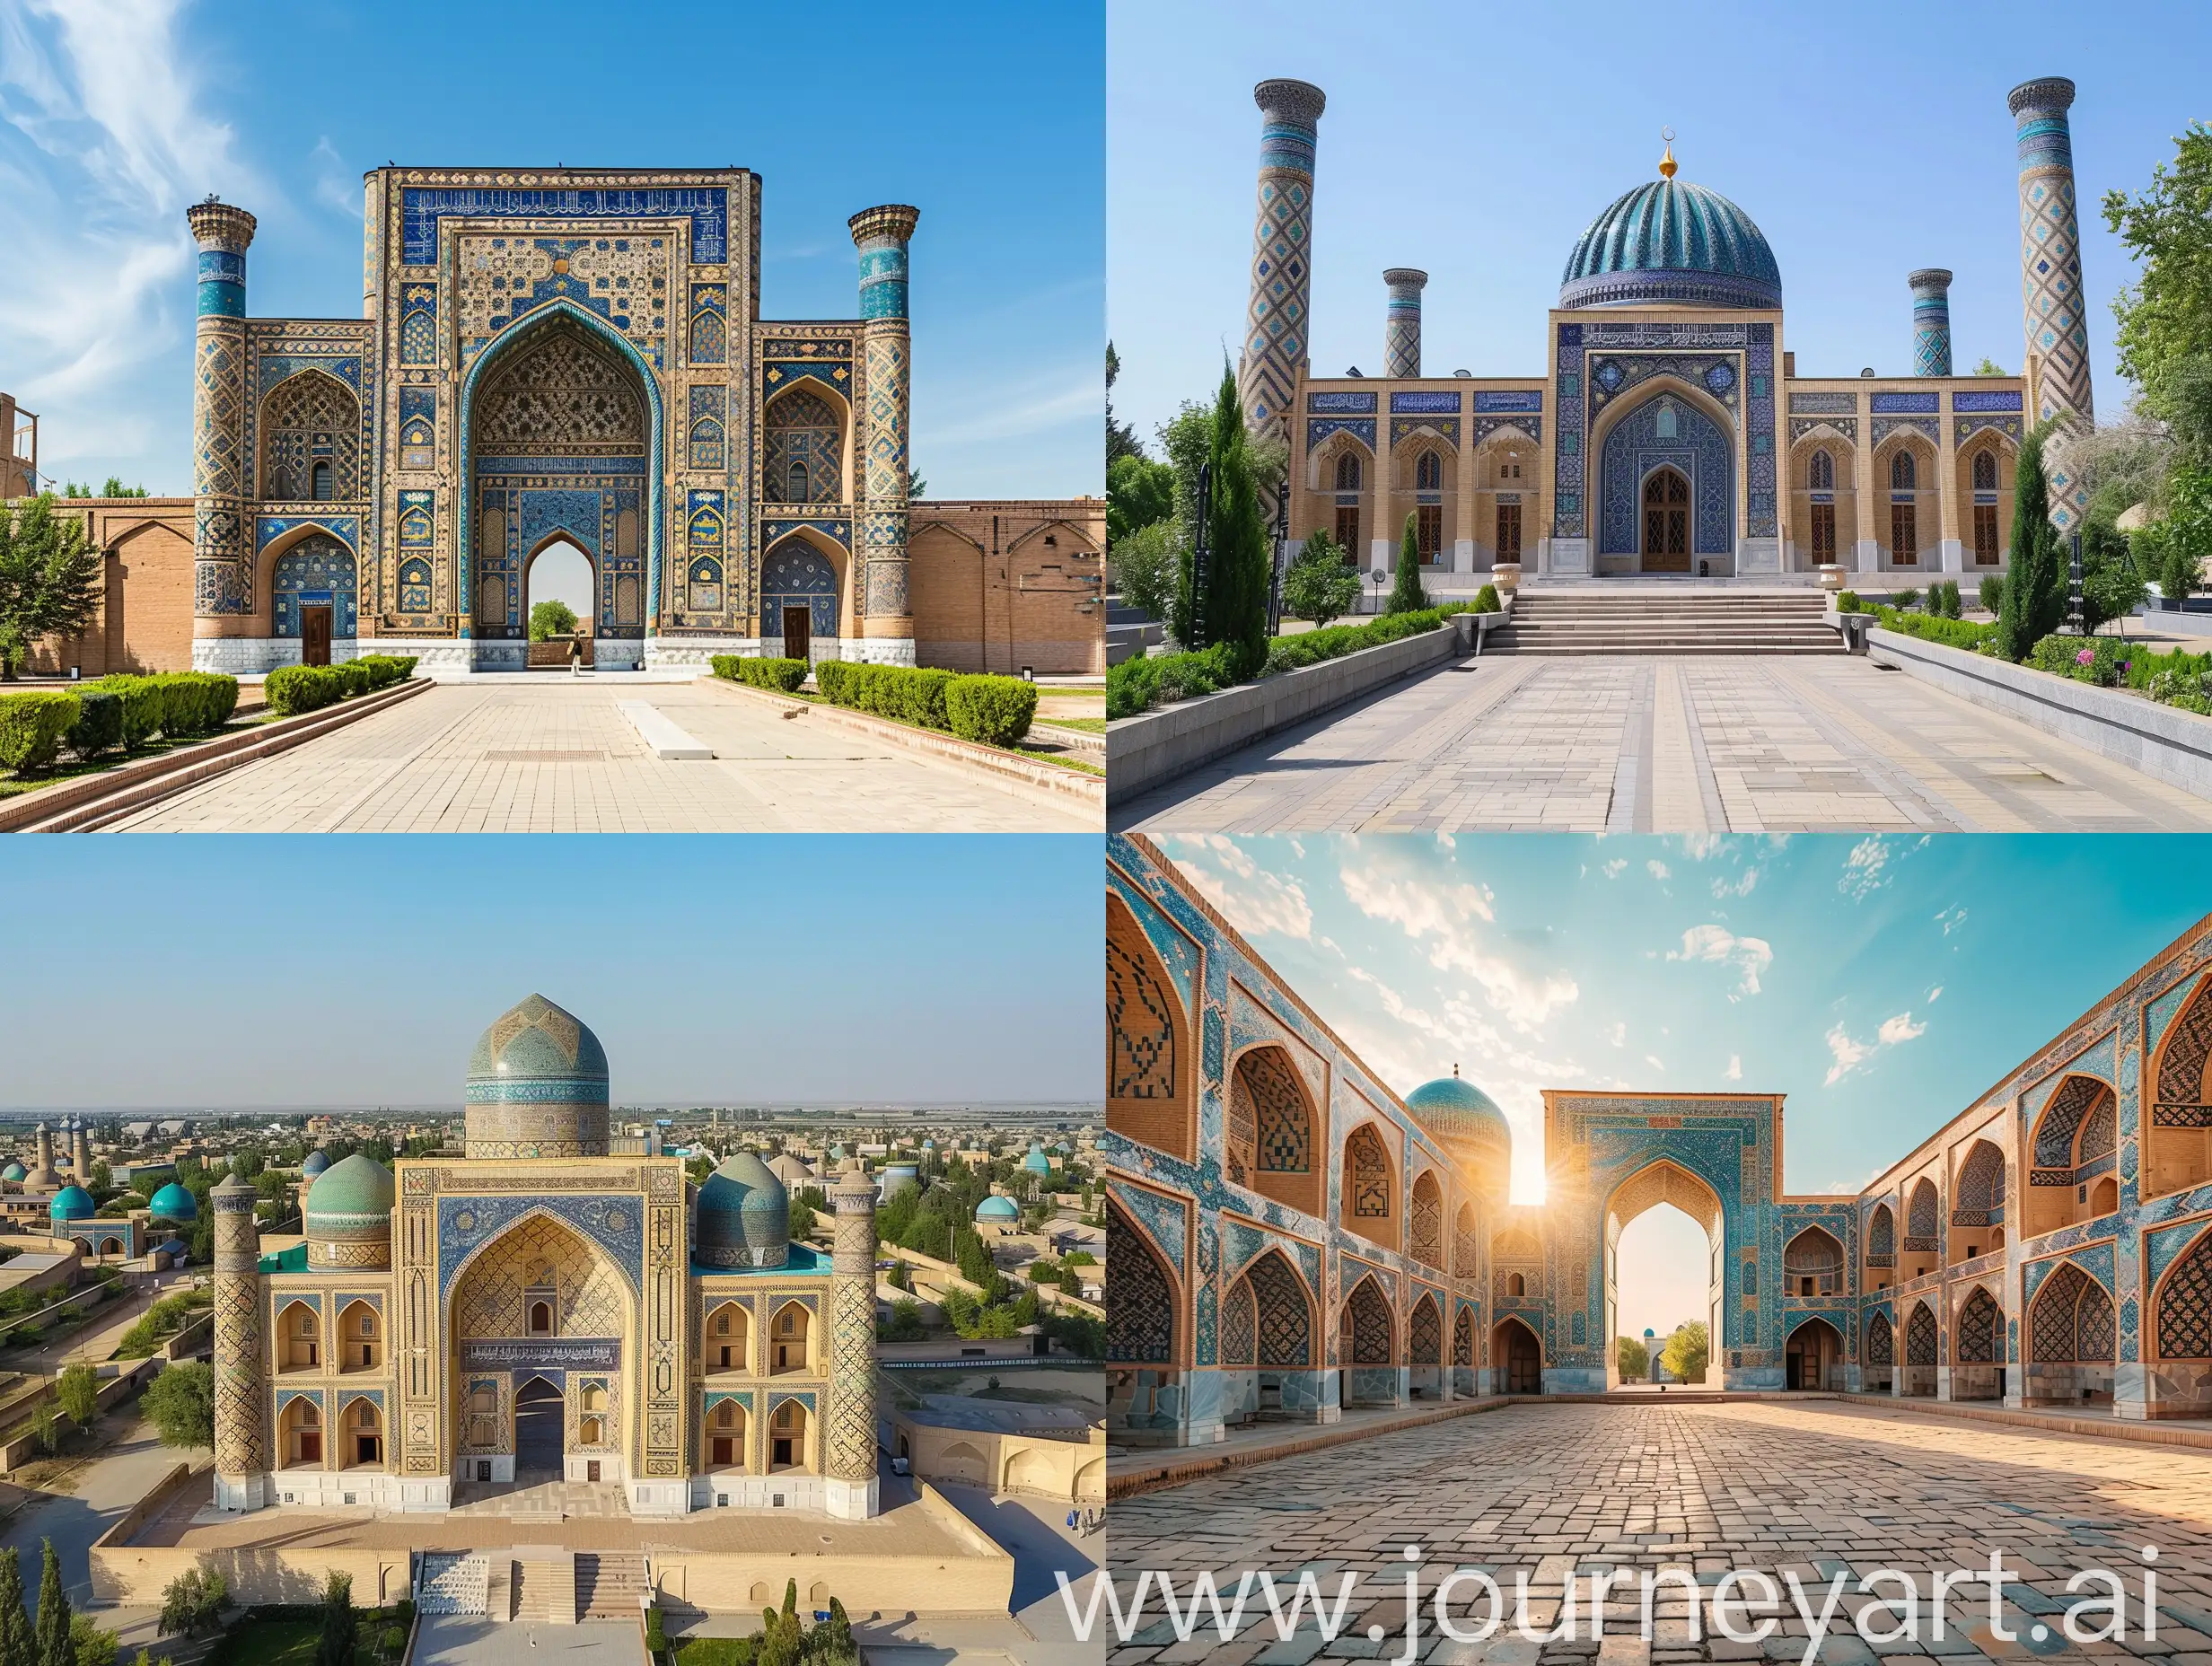 how imagine uzbekiston in 50 years future of uzbekistan

